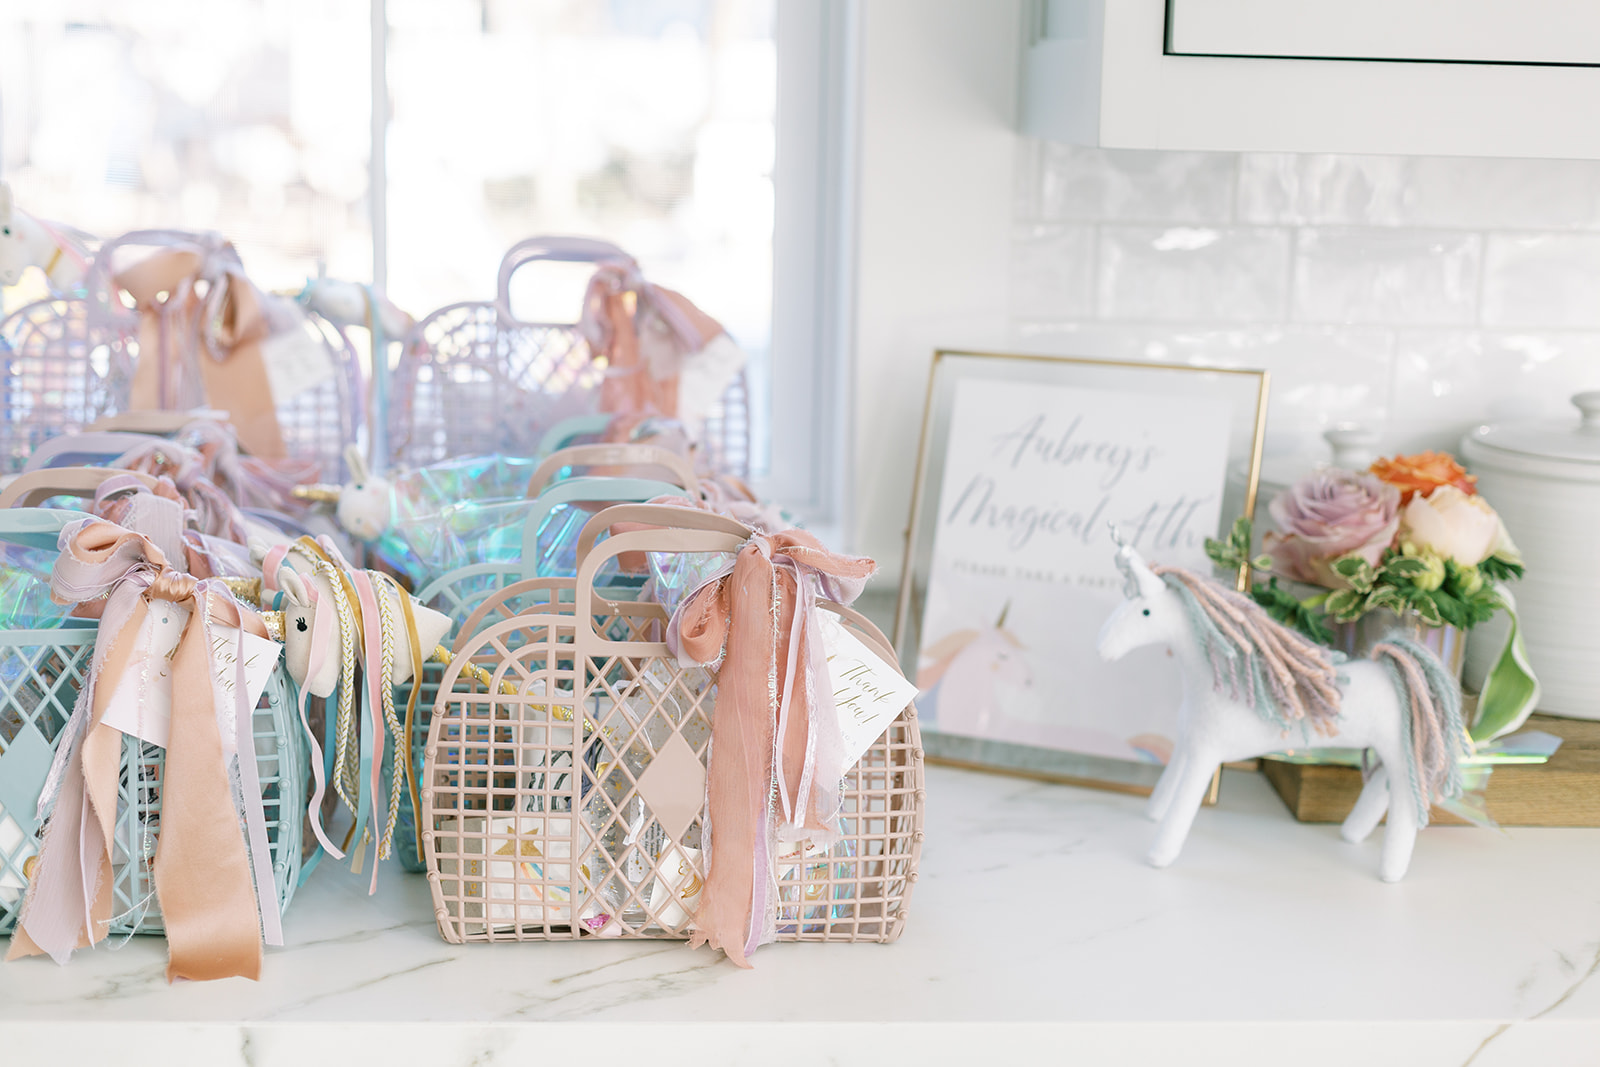 Handbag Theme Invite | Swap party, Party purse, Purse decorations